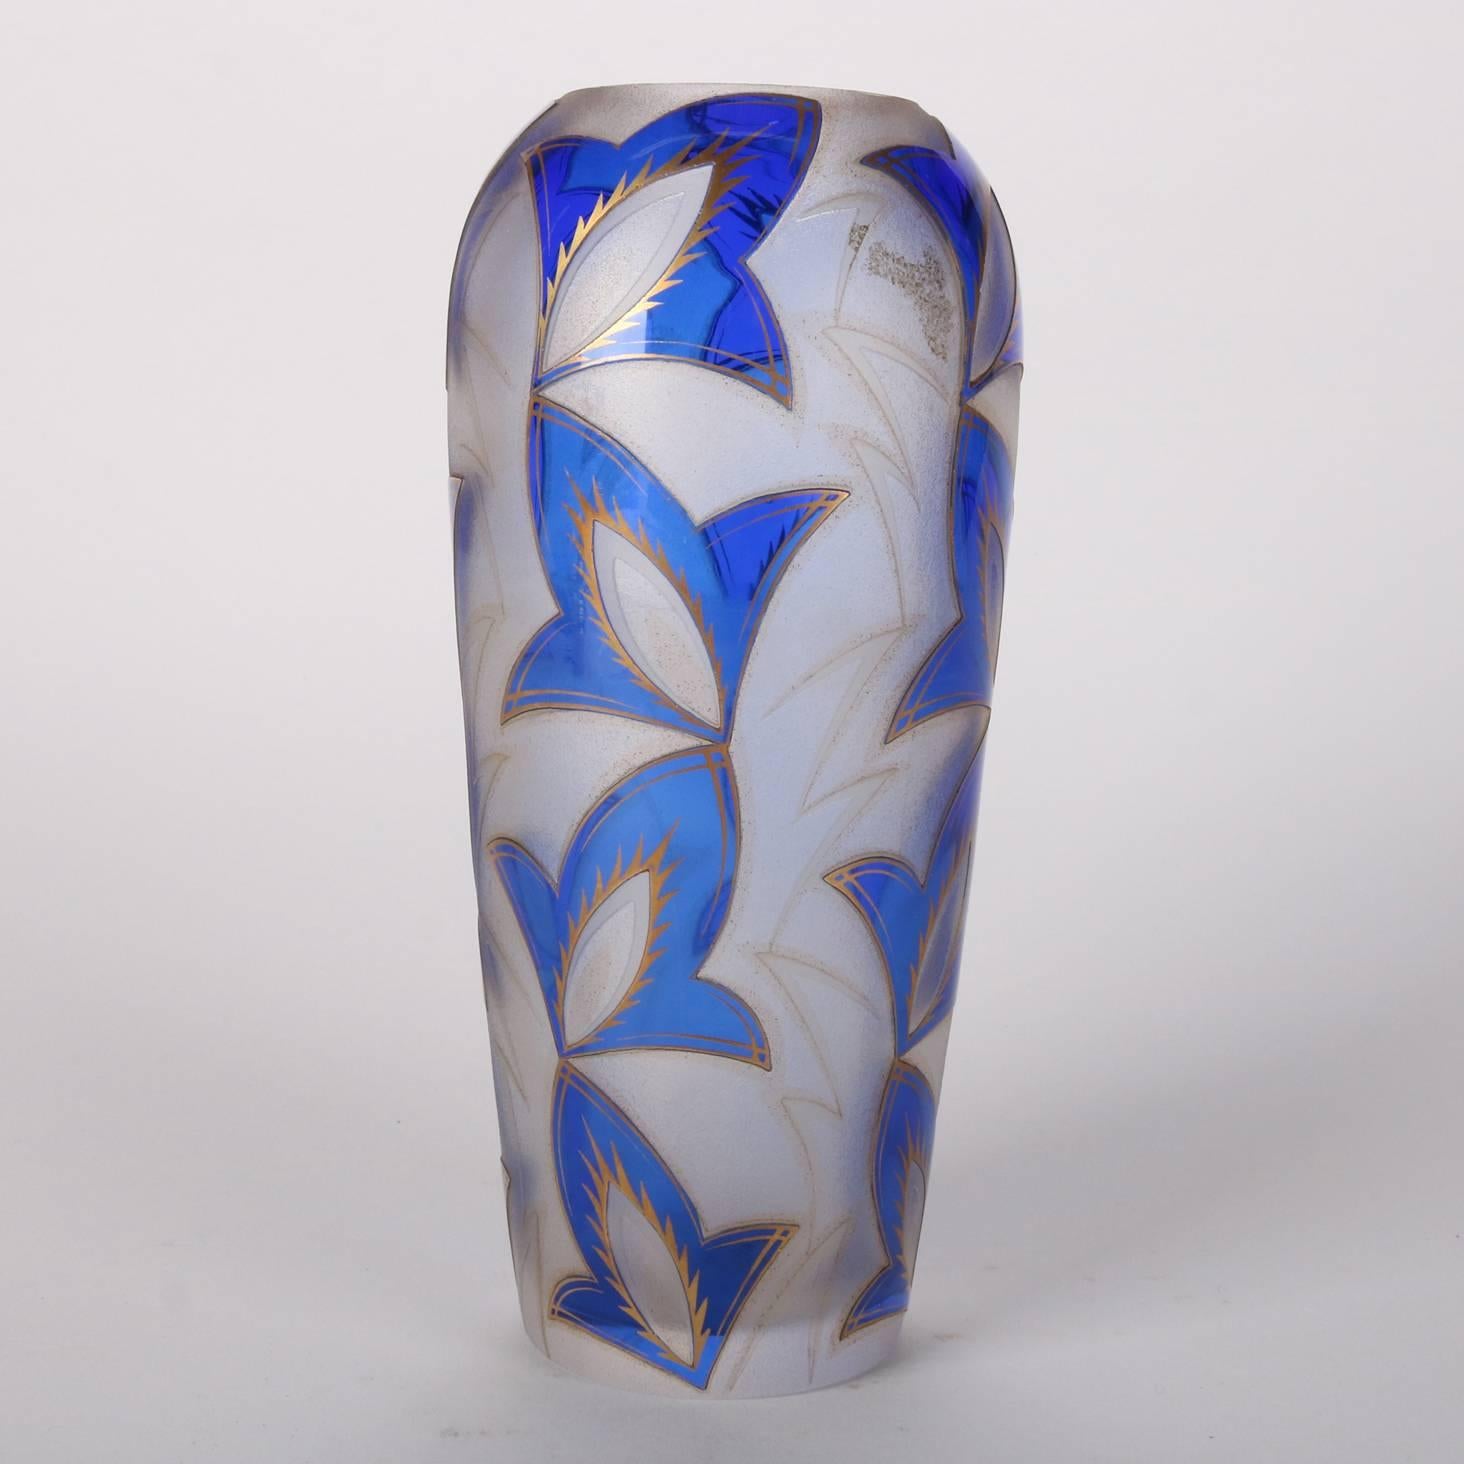 Antique Art Deco Daum Nancy School cut back glass vase feature cobalt blue stylized leaf pattern with gilt highlights, 20th century.

Measures: 8.75